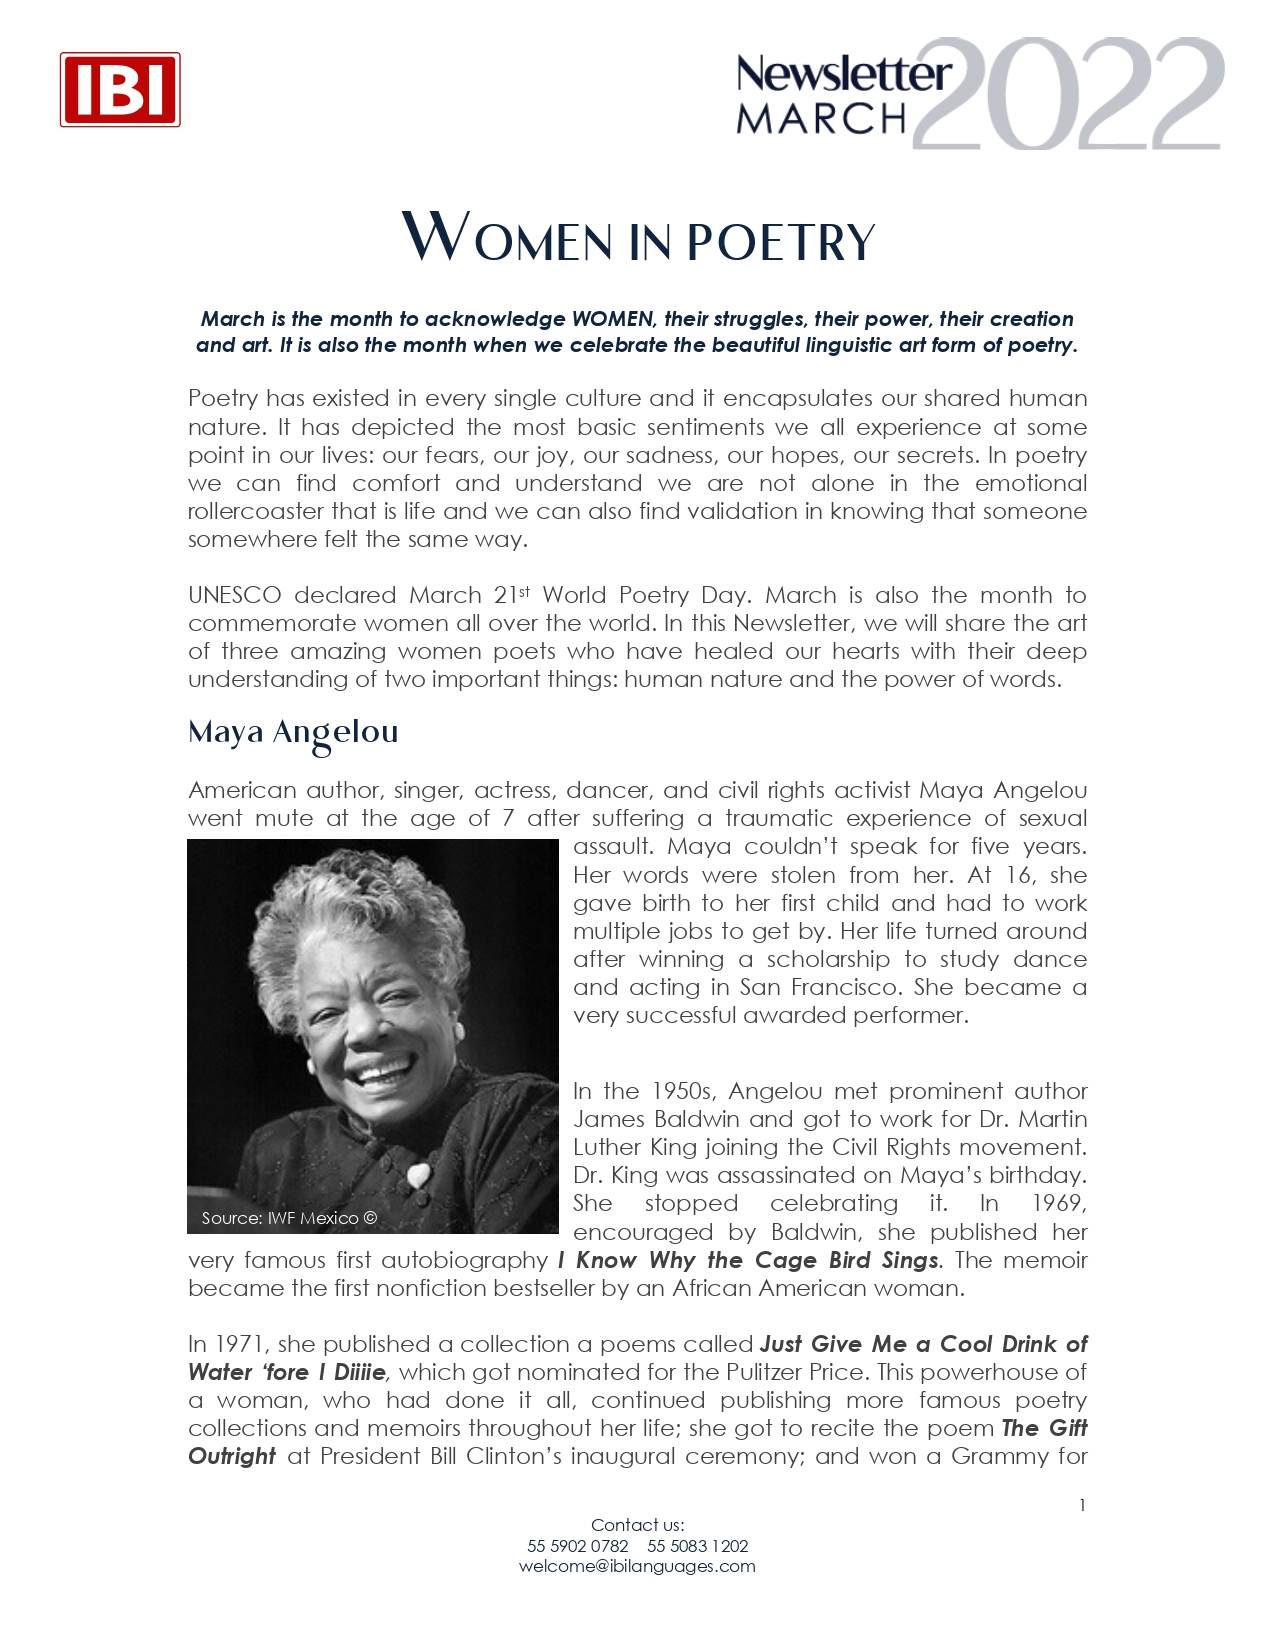 poetry day women poets